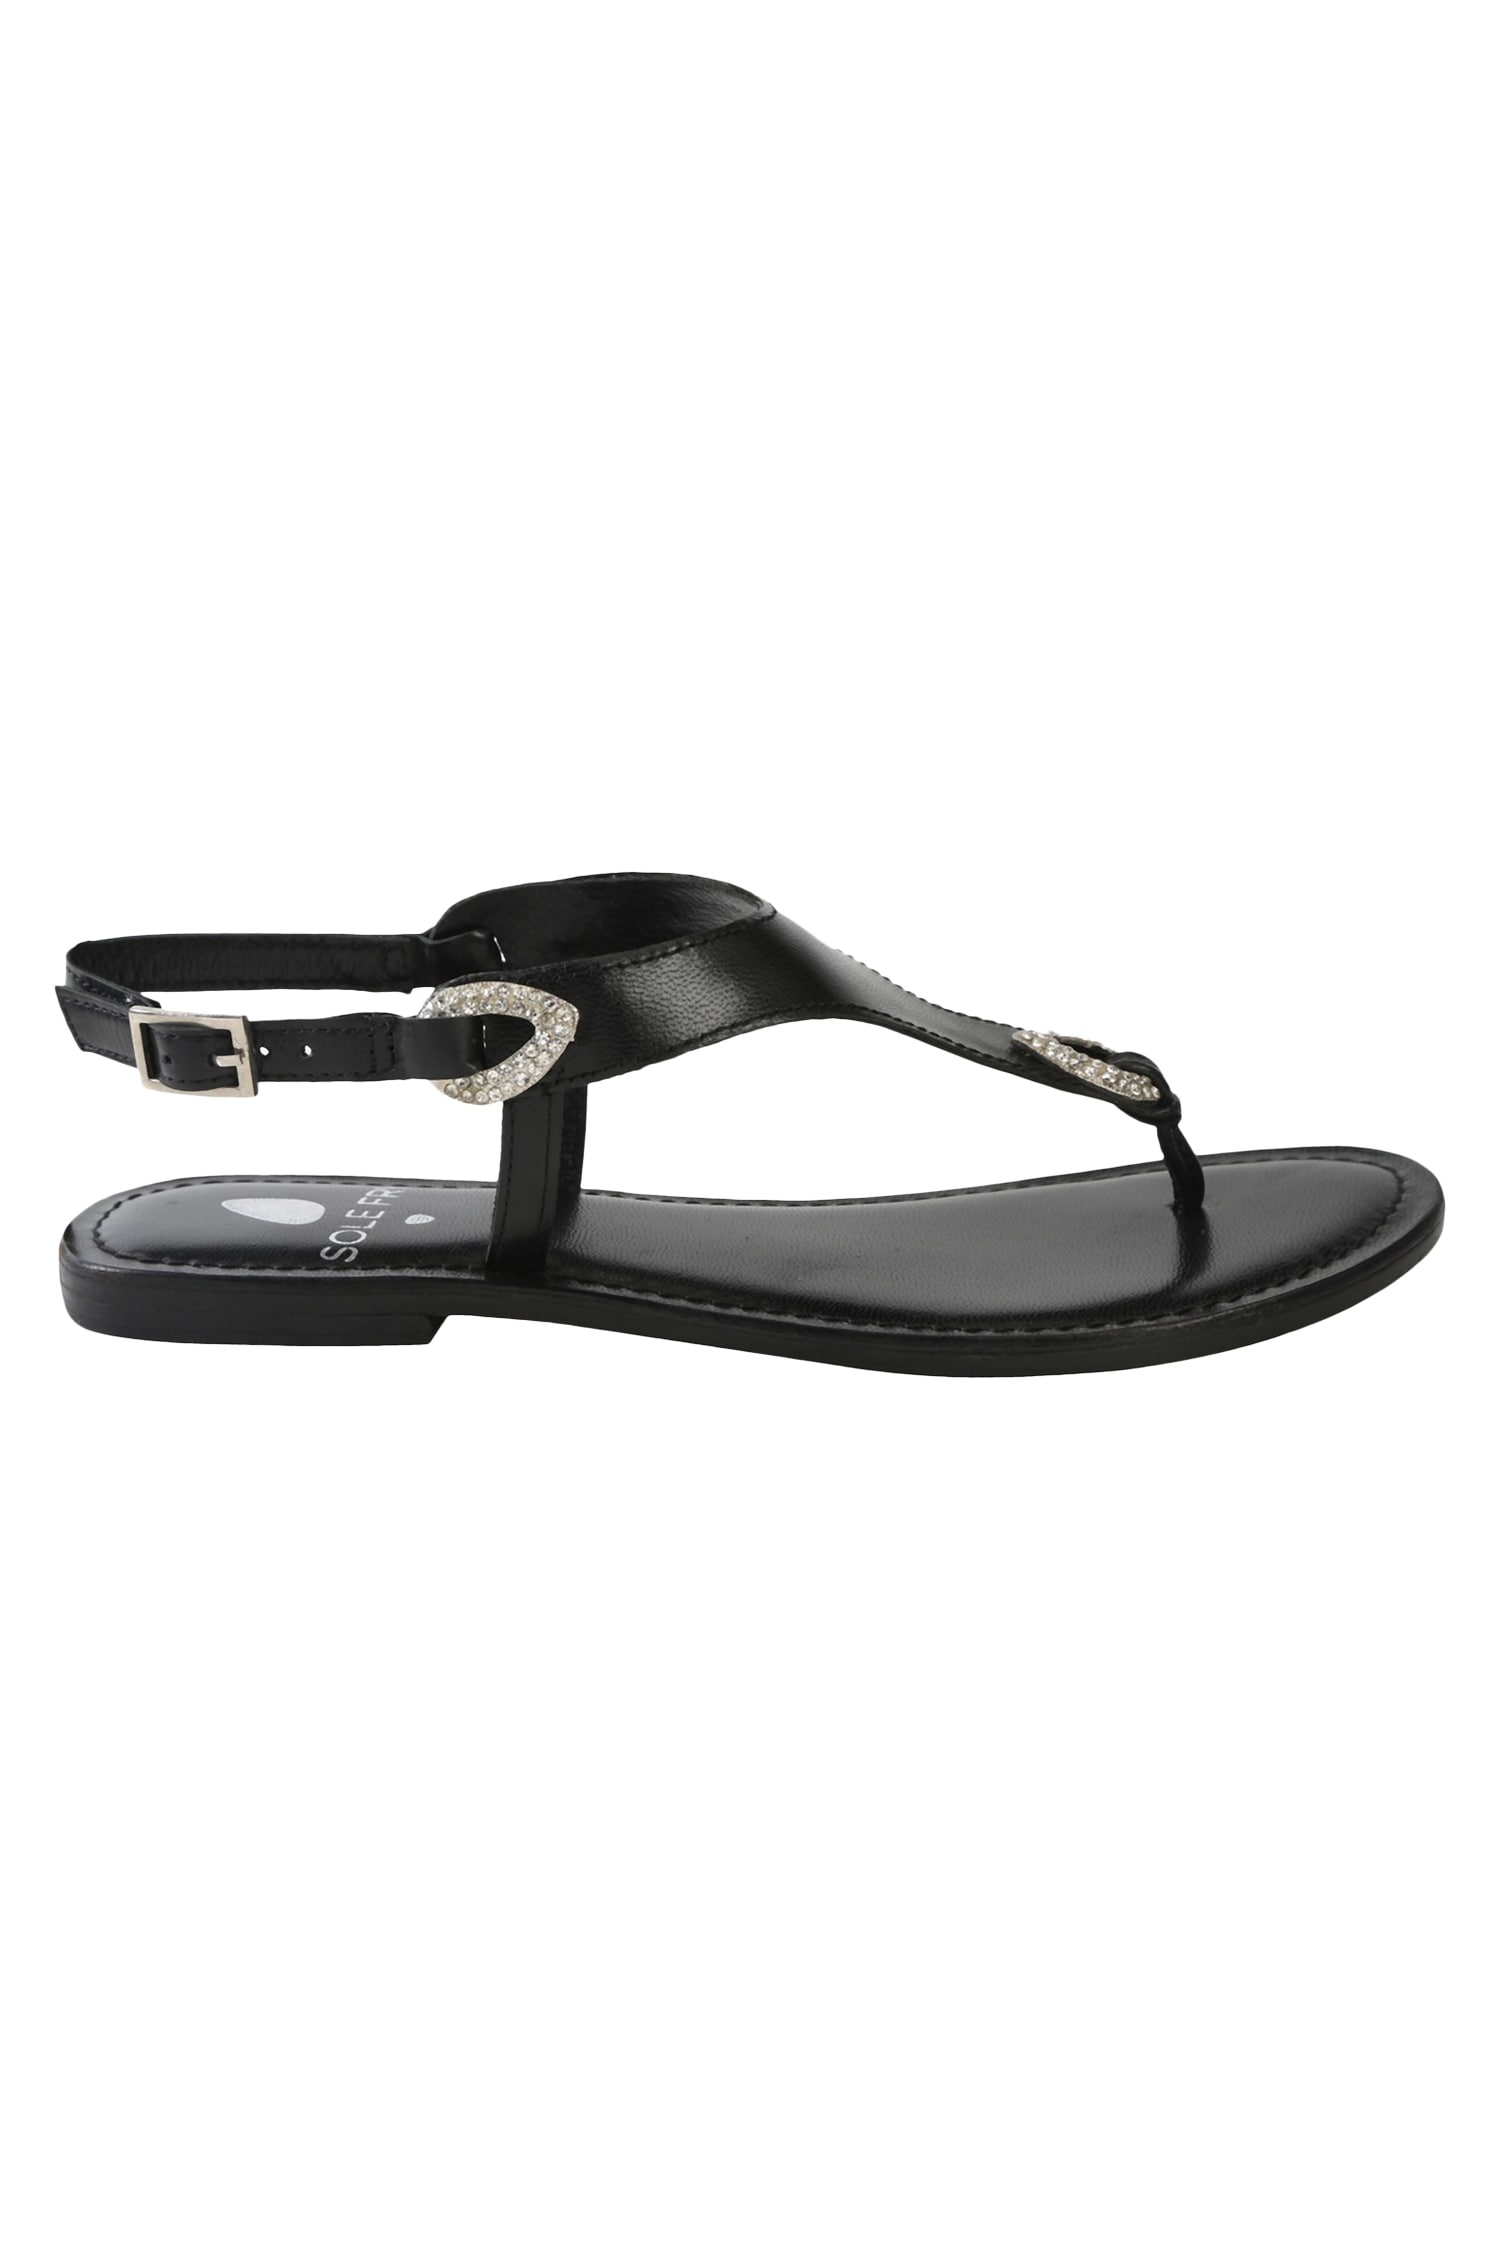 Buy Sole Fry Black Sling Back Flat Sandals Online | Aza Fashions